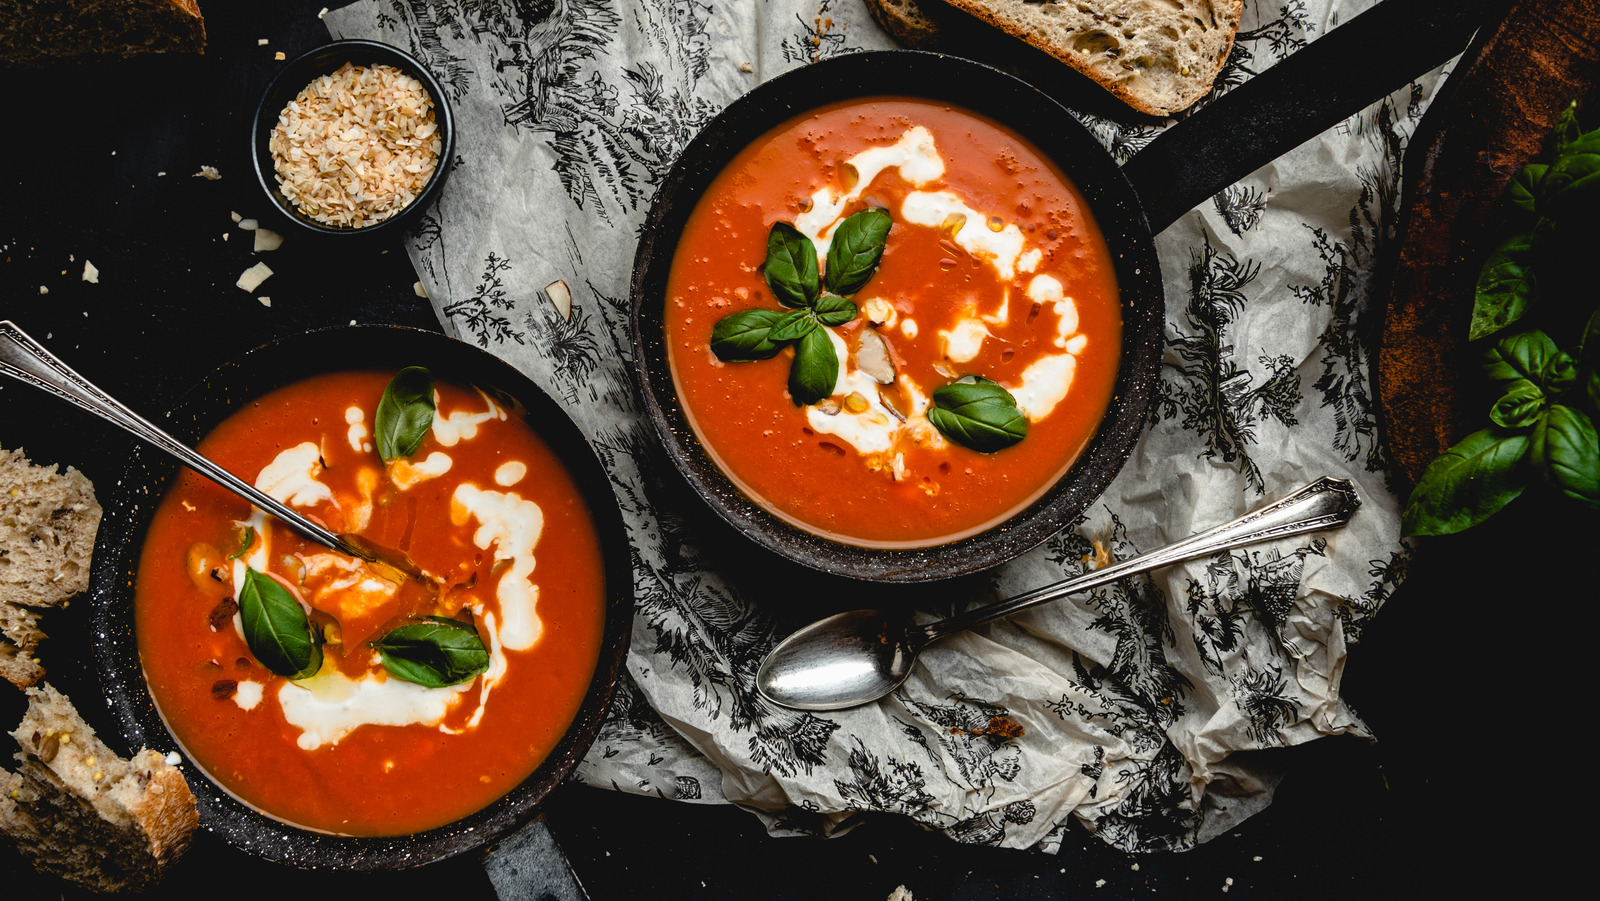 Gordon Ramsay's Roasted Creamy Tomato Soup Features A Unique Kick